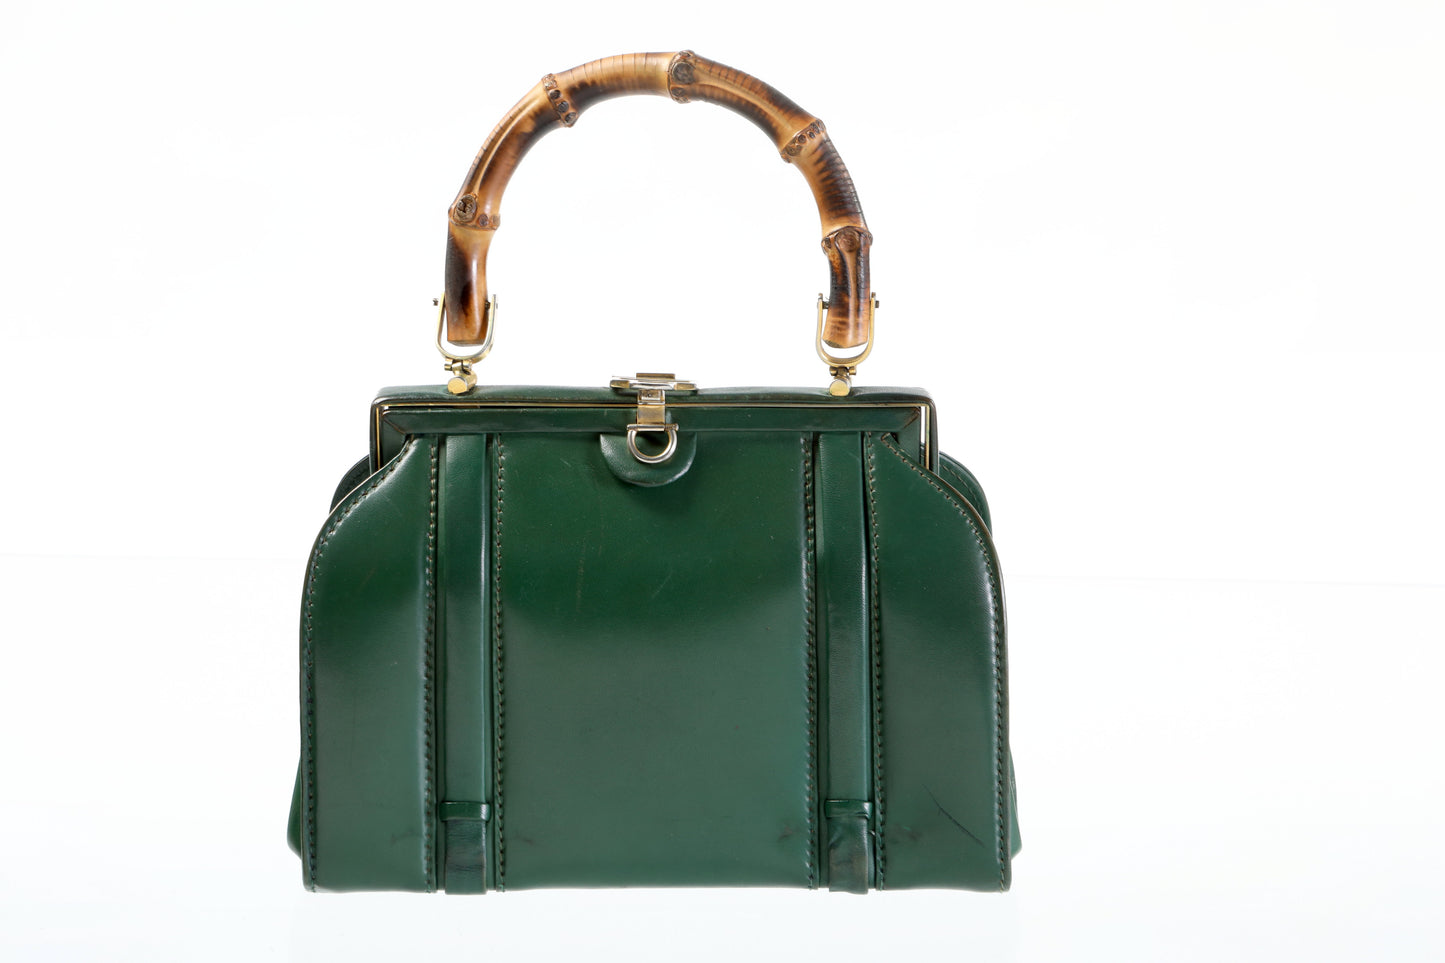 1950s green leather handbag